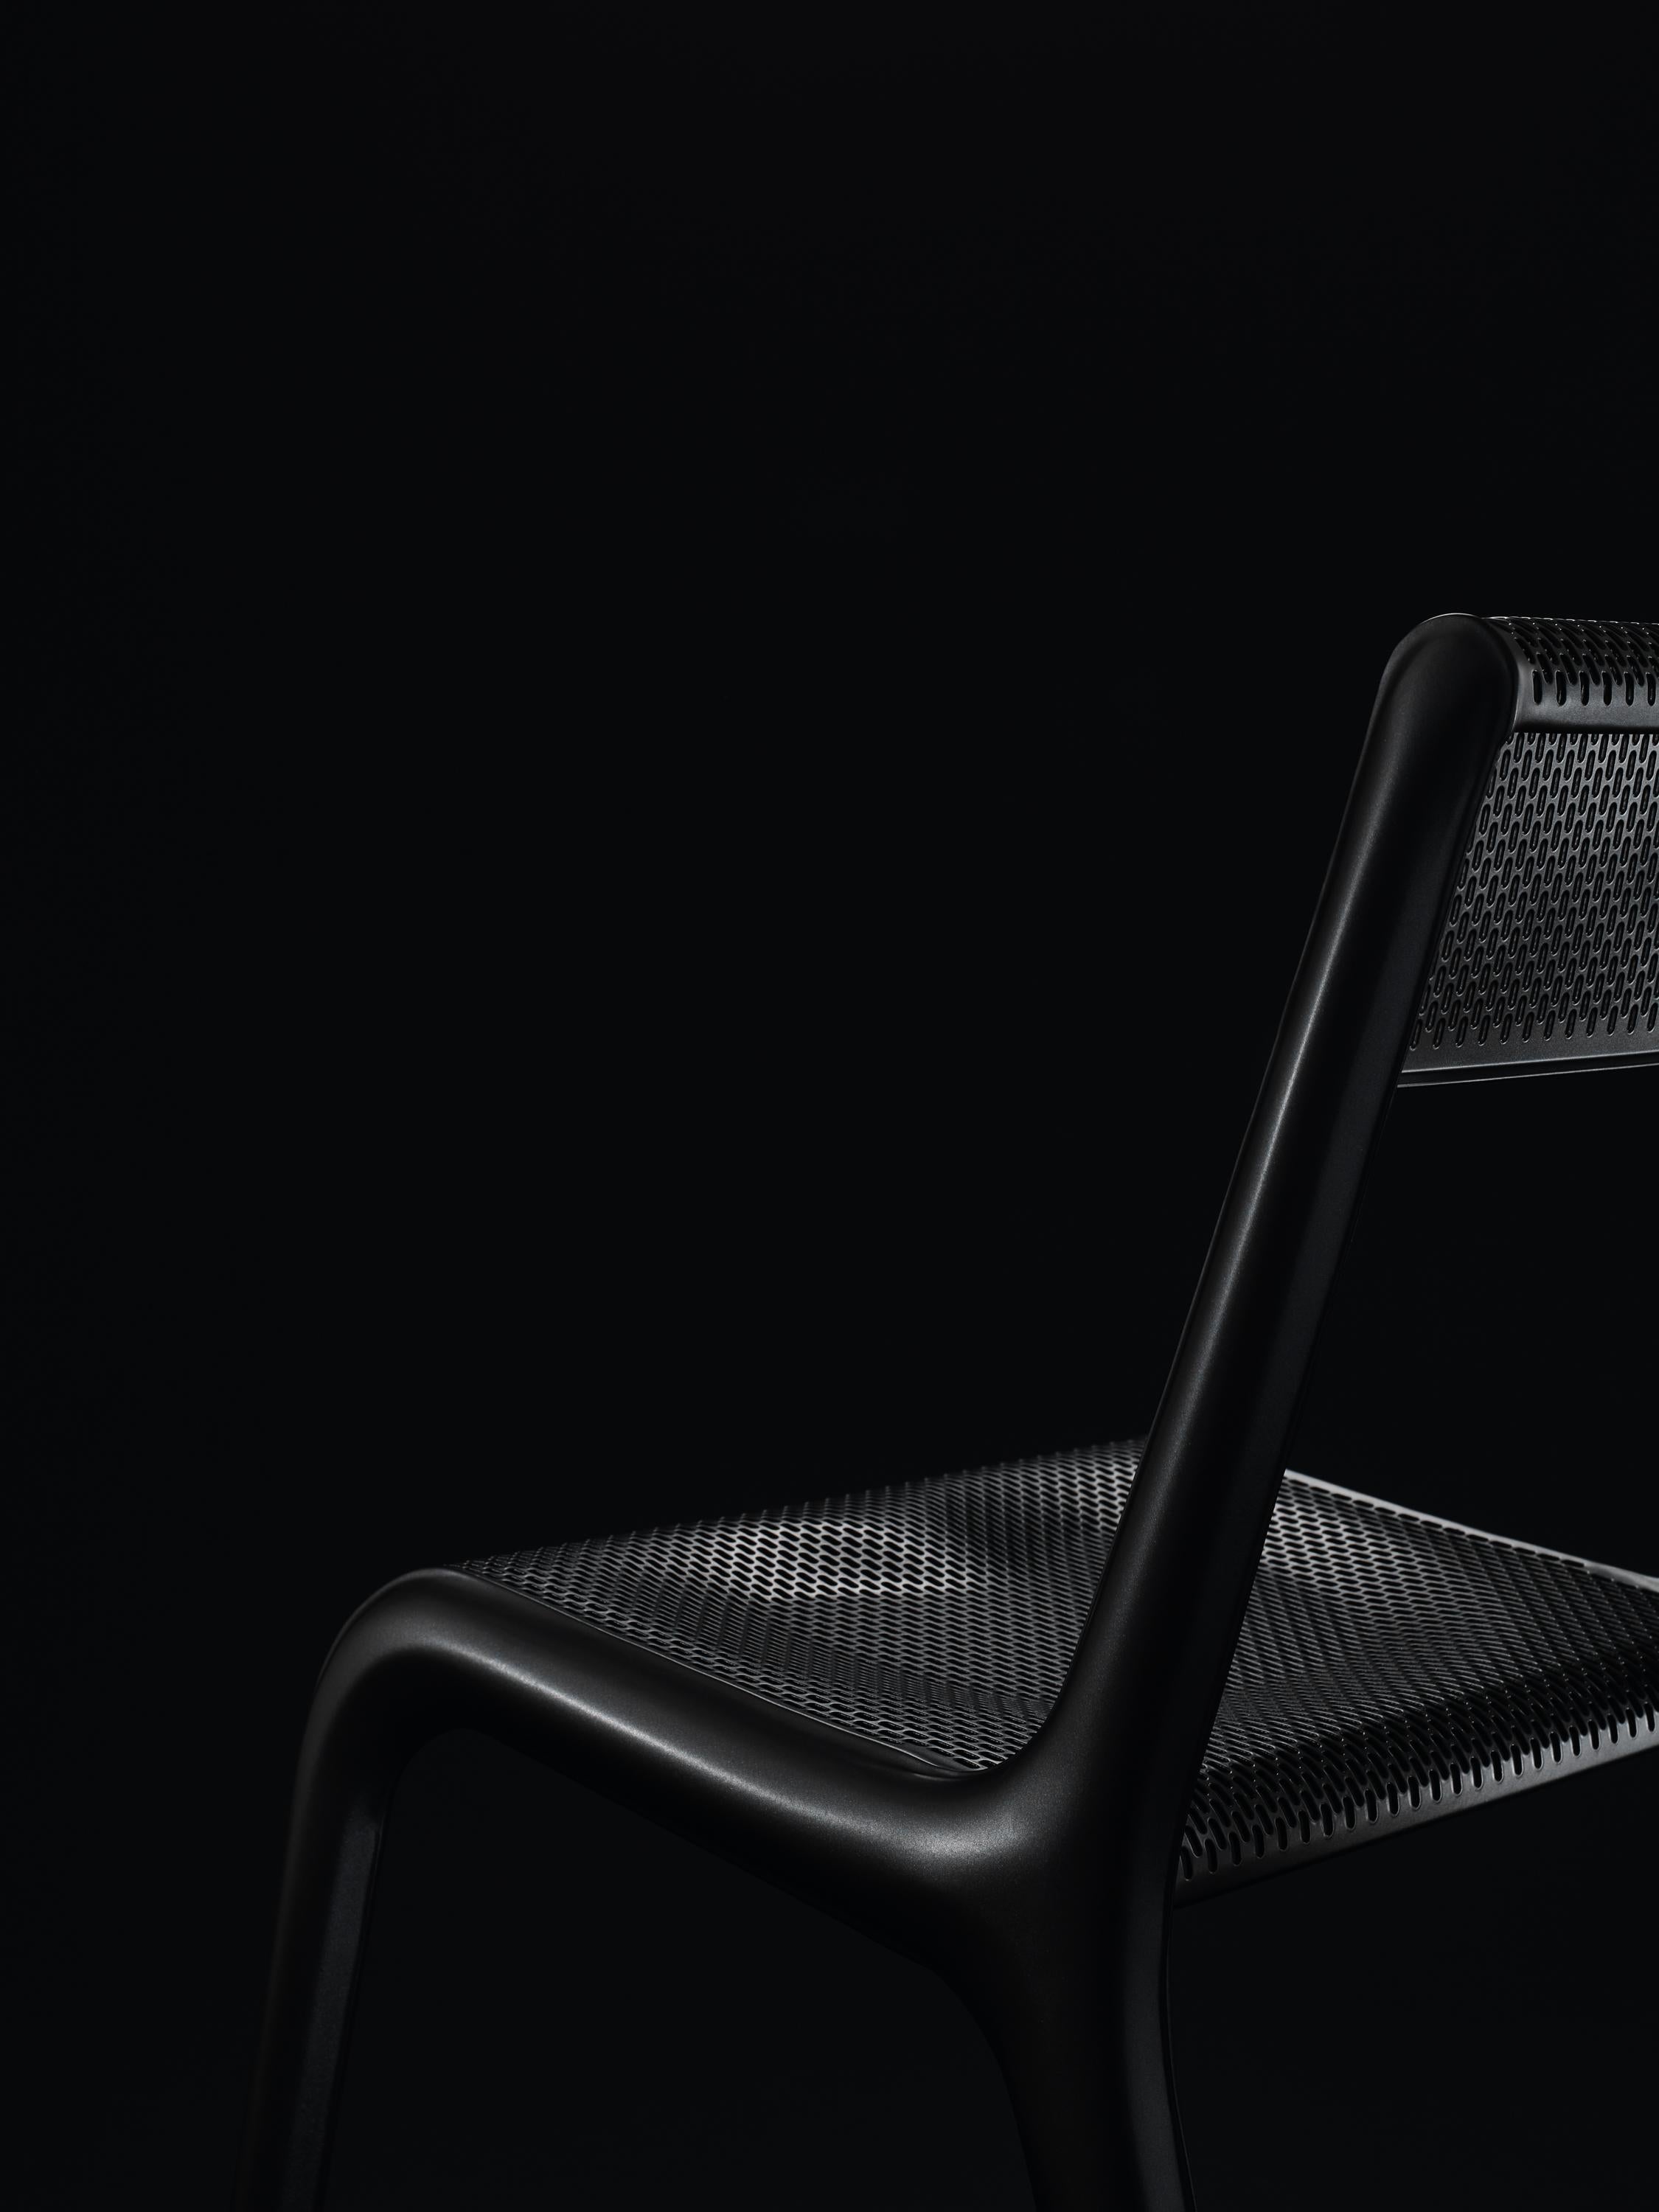 Powder-Coated Black Anodic Ultraleggera Chair by Zieta For Sale